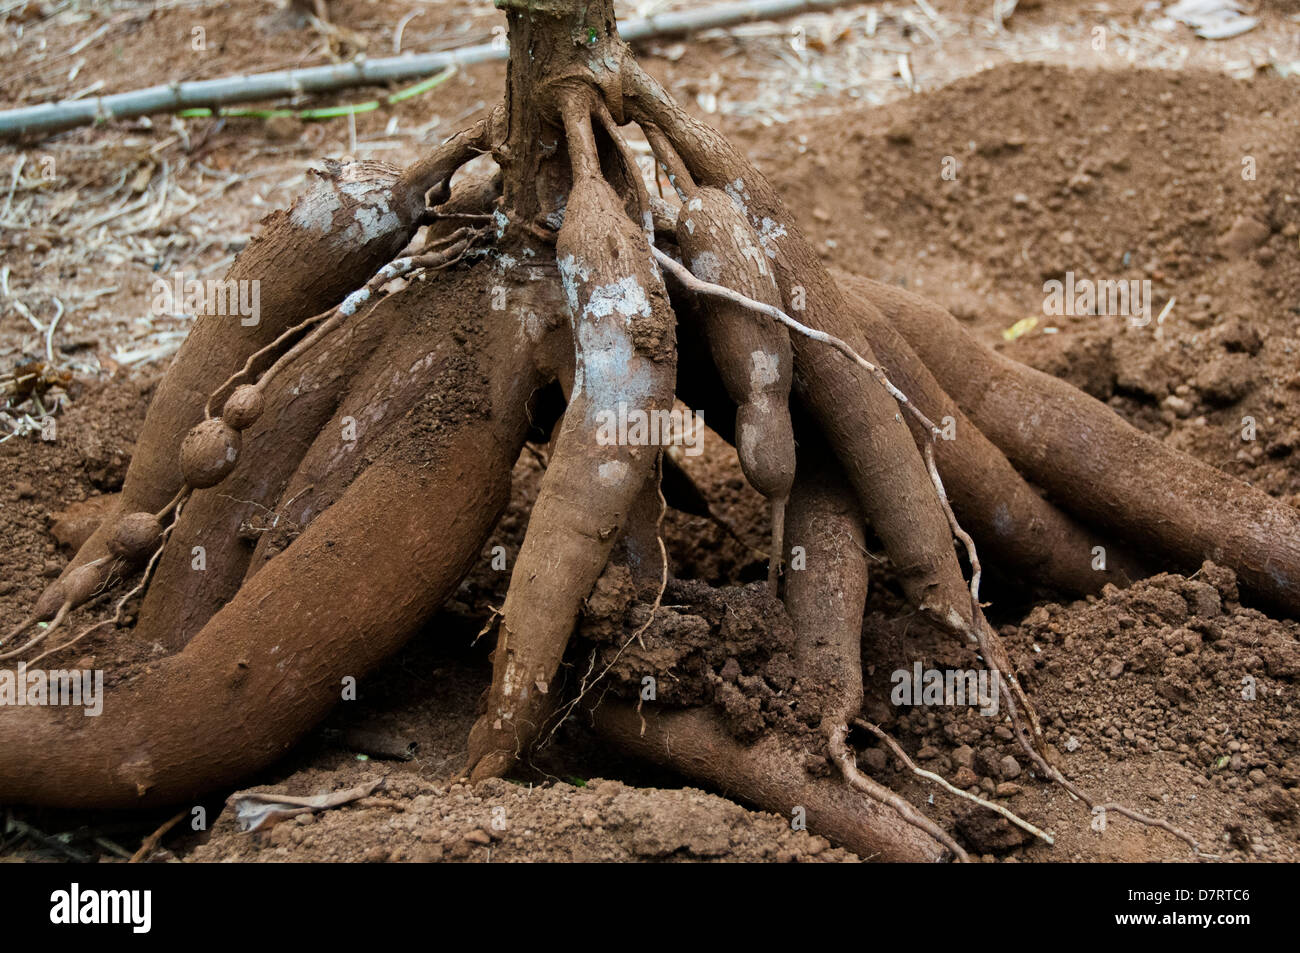 Cassava tapioca reaping farm field kerala, India Stock Photo